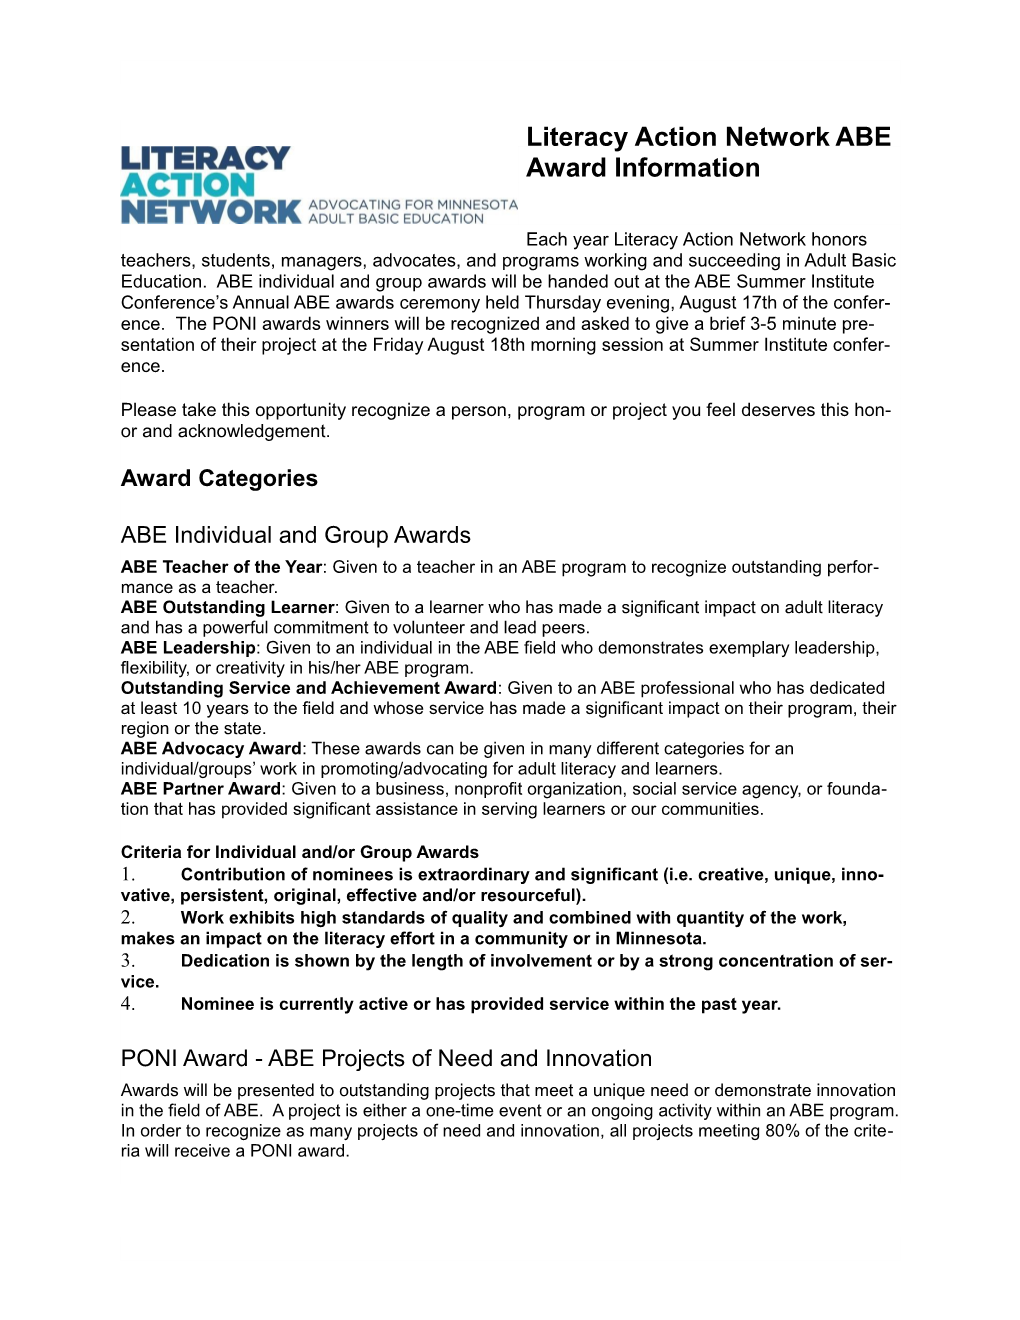 Literacy Action Network ABE Award Information